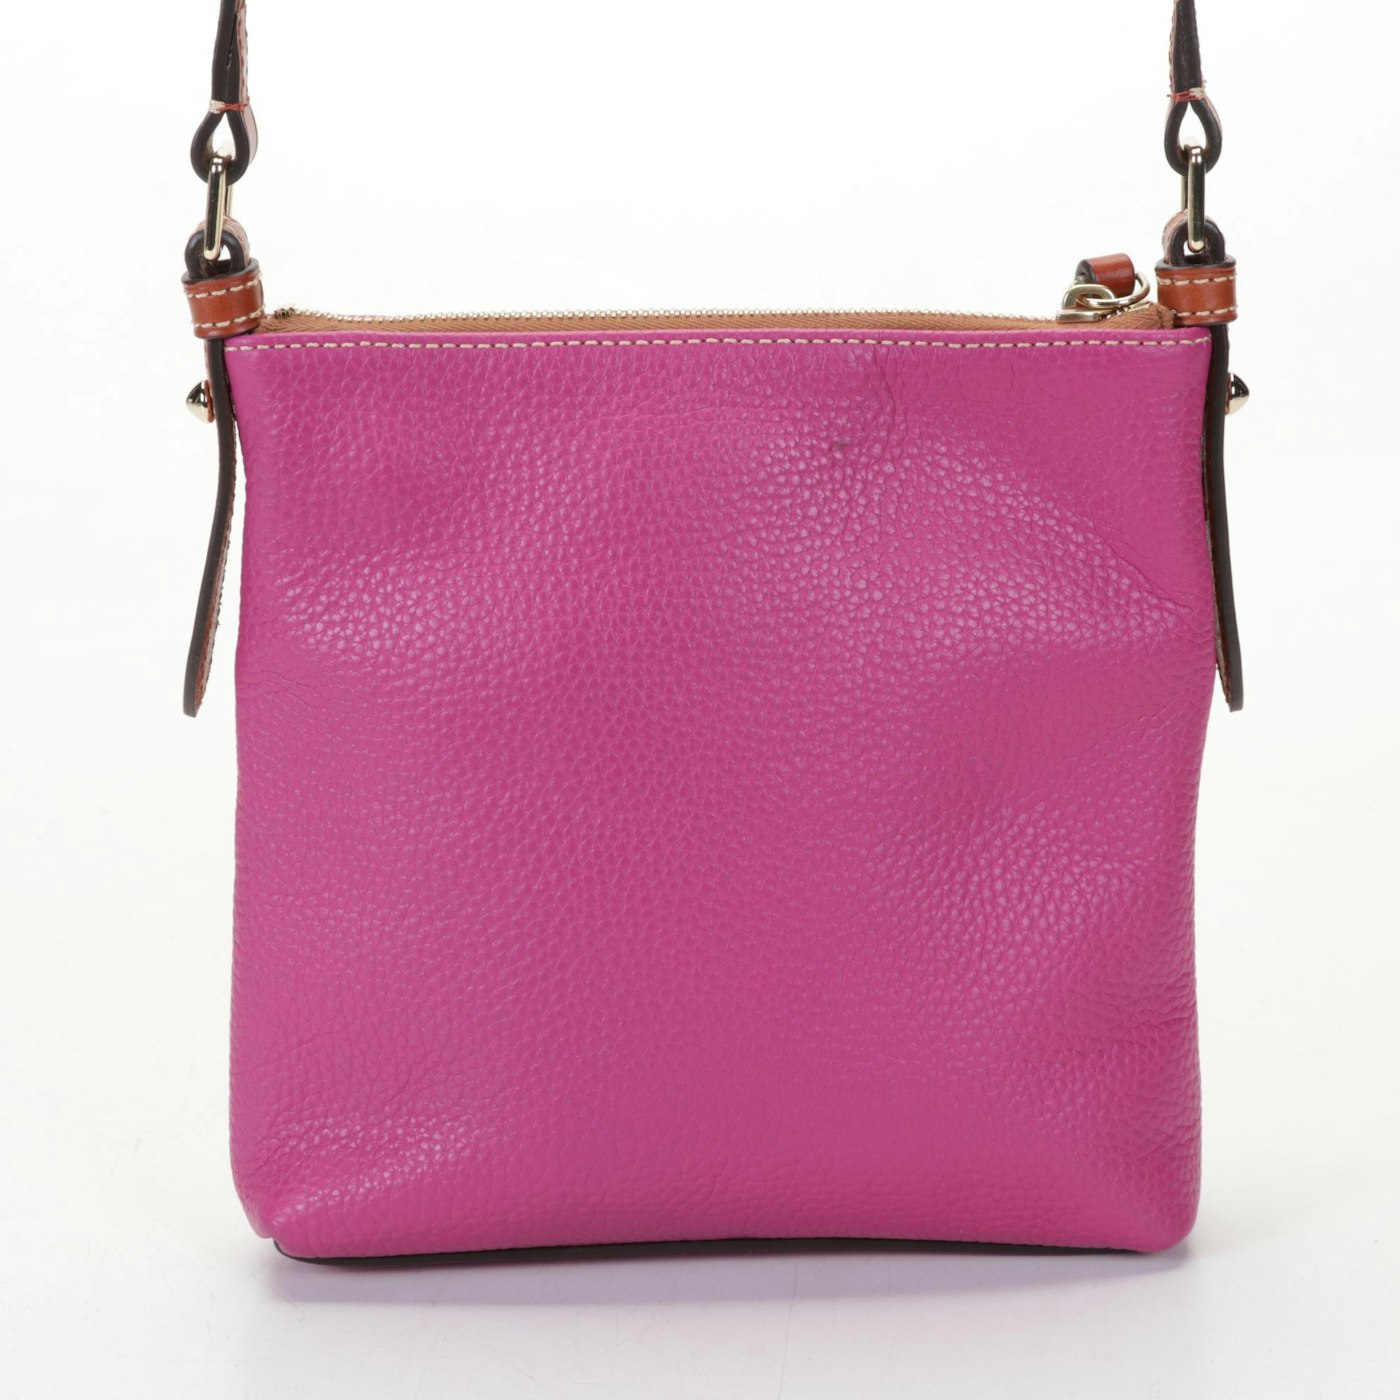 Dooney & Bourke Crossbody Bag in Pink Pebbled Leather | EBTH